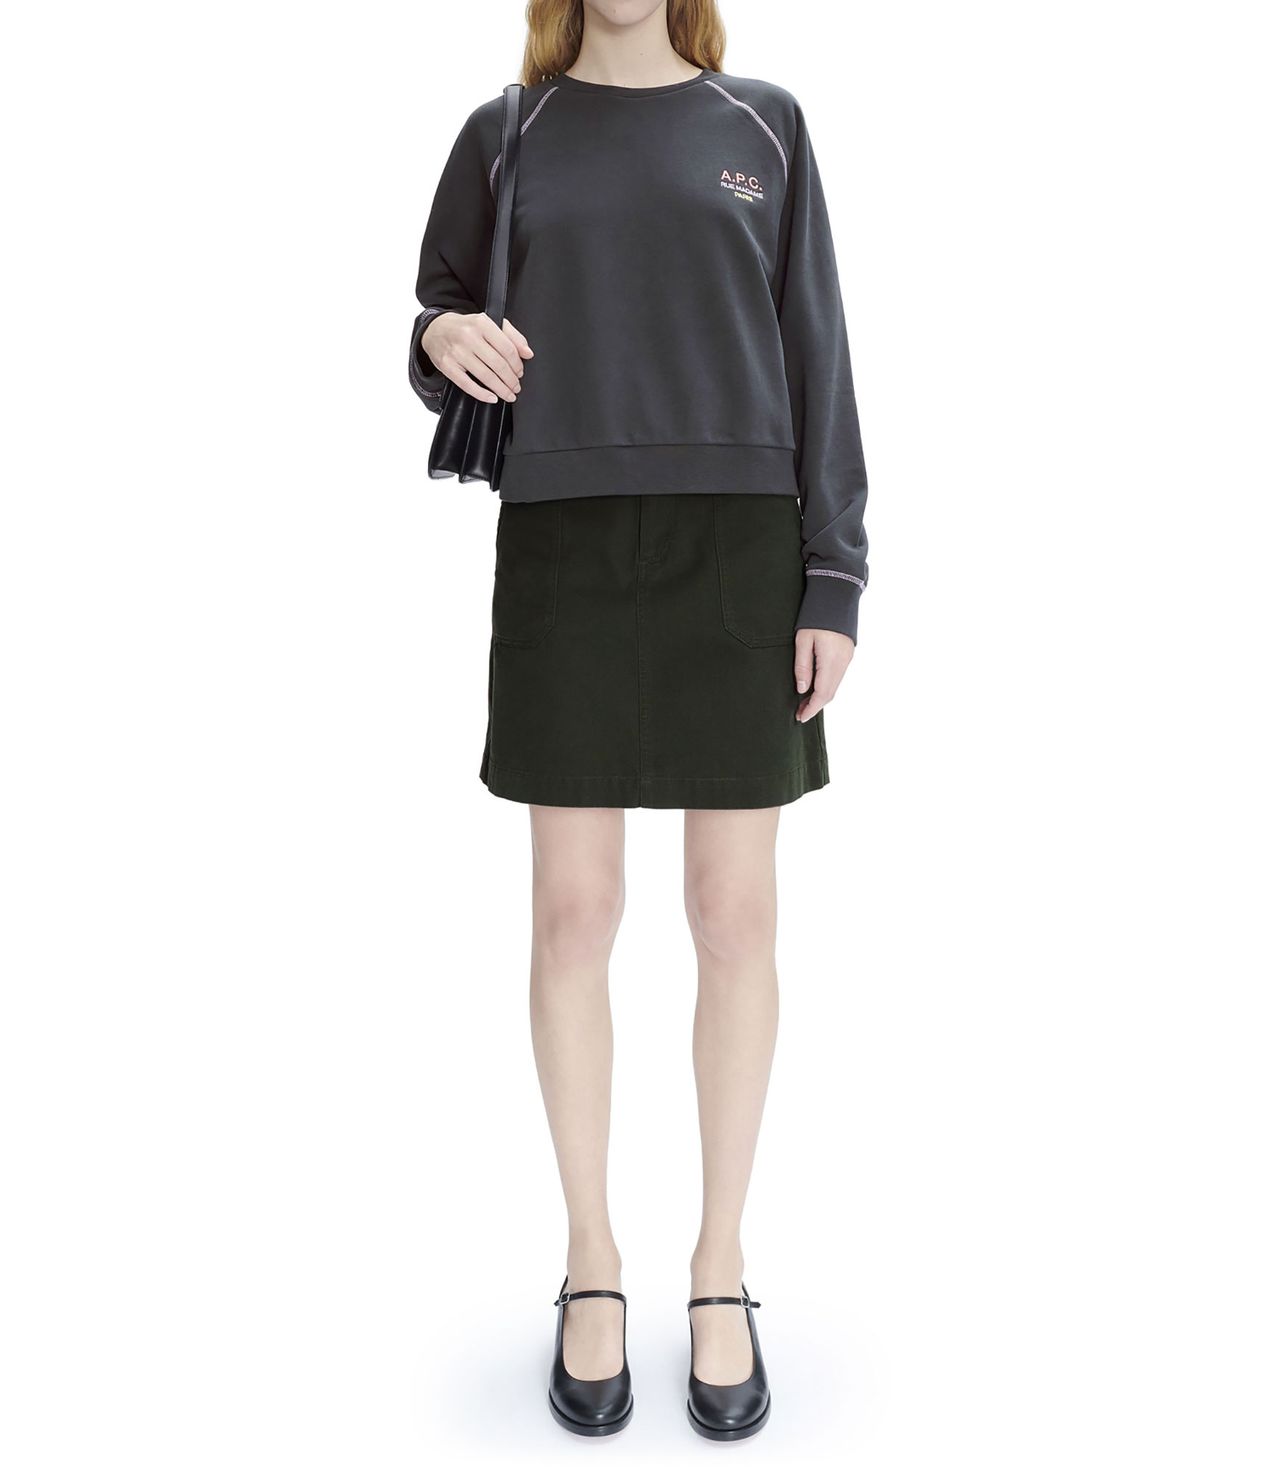 Sonia sweatshirt CHARCOAL GREY APC